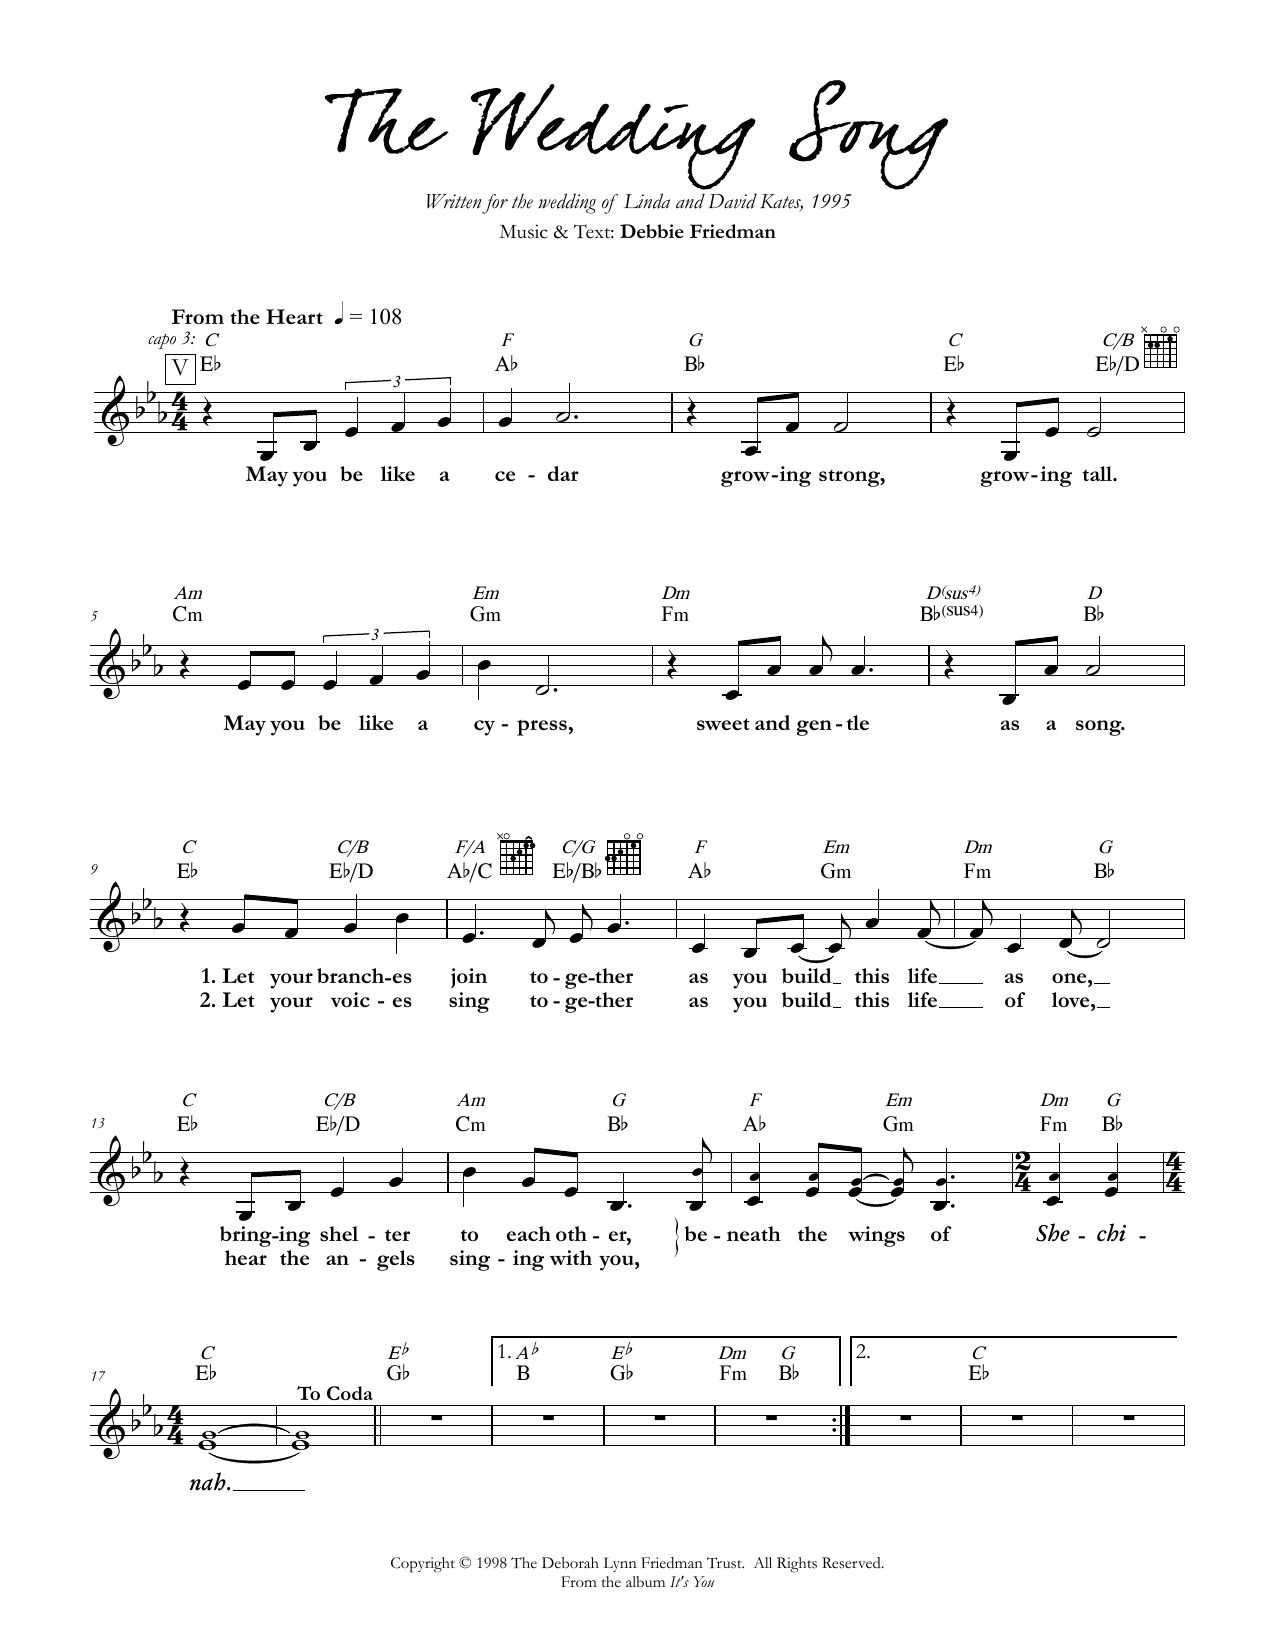 The Wedding Song sheet music